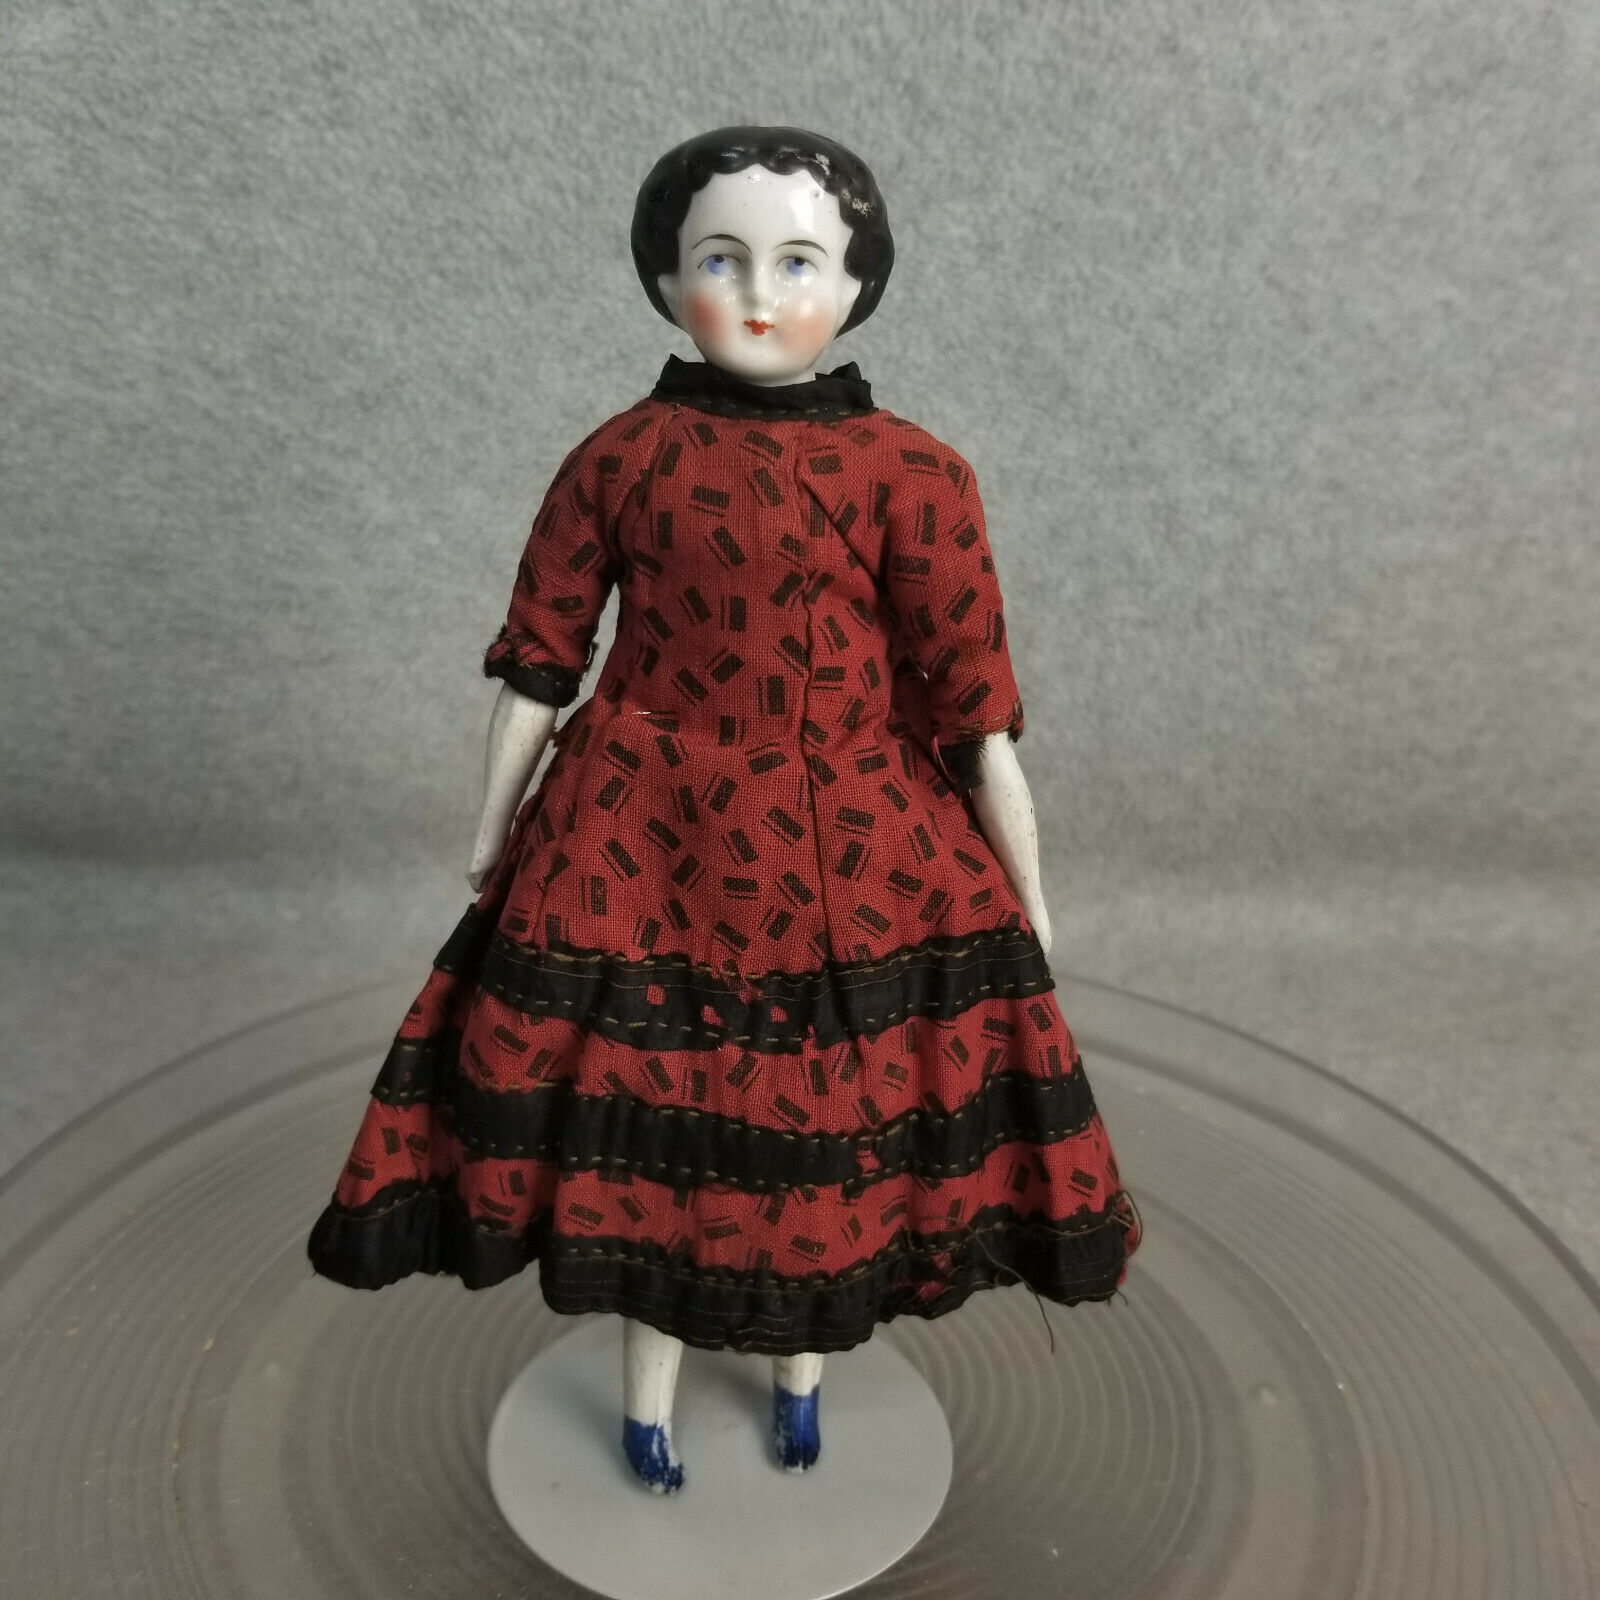 8" Antique German China Shoulder Head Doll 1880s Dollhouse Size For Restoration